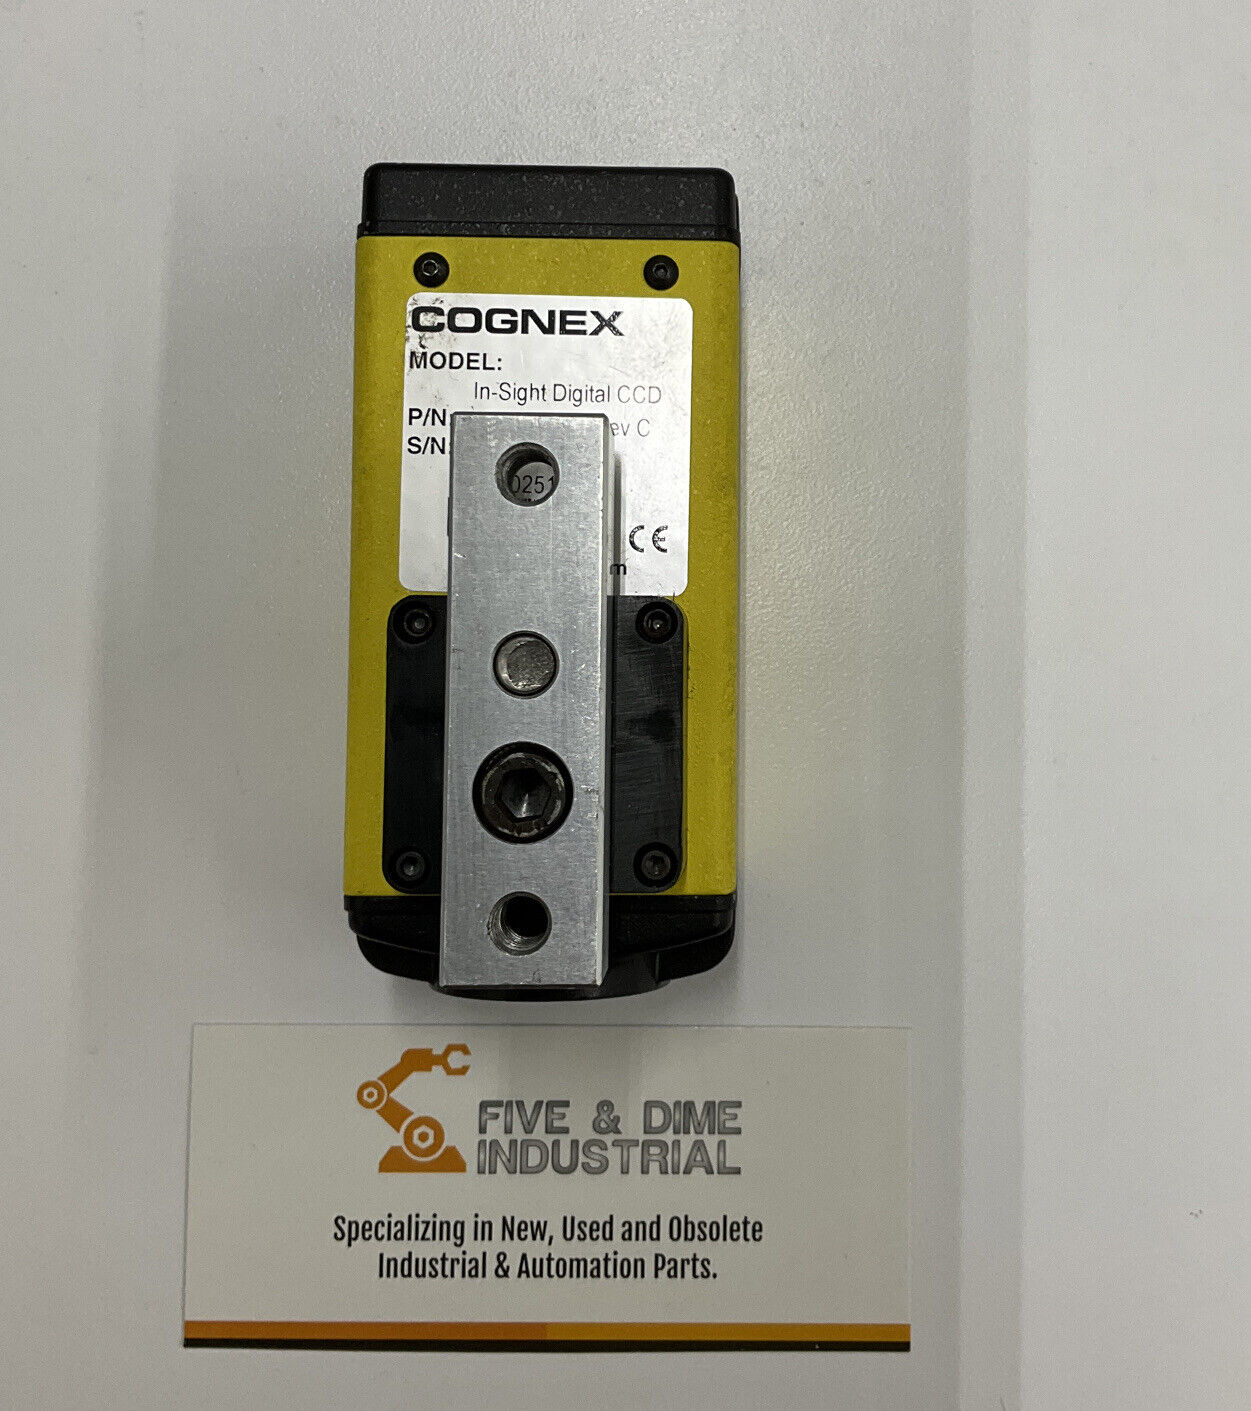 Cognex In-Sight Digital CCD 800-5715-1 Rev C Camera Machine Vision (BL240)